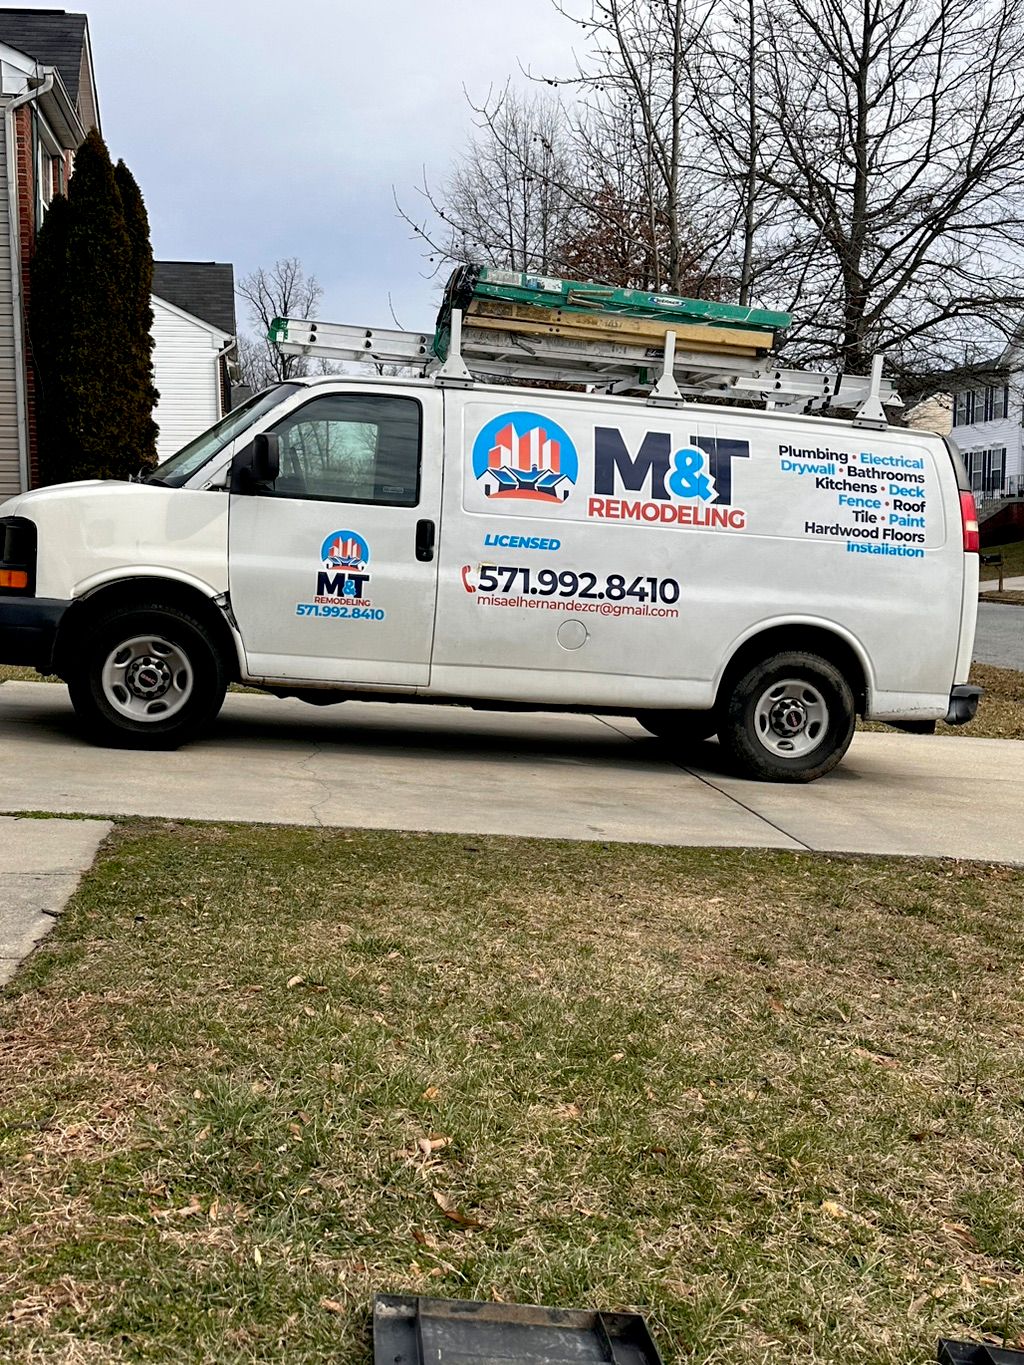 M&T Remodeling,LLC